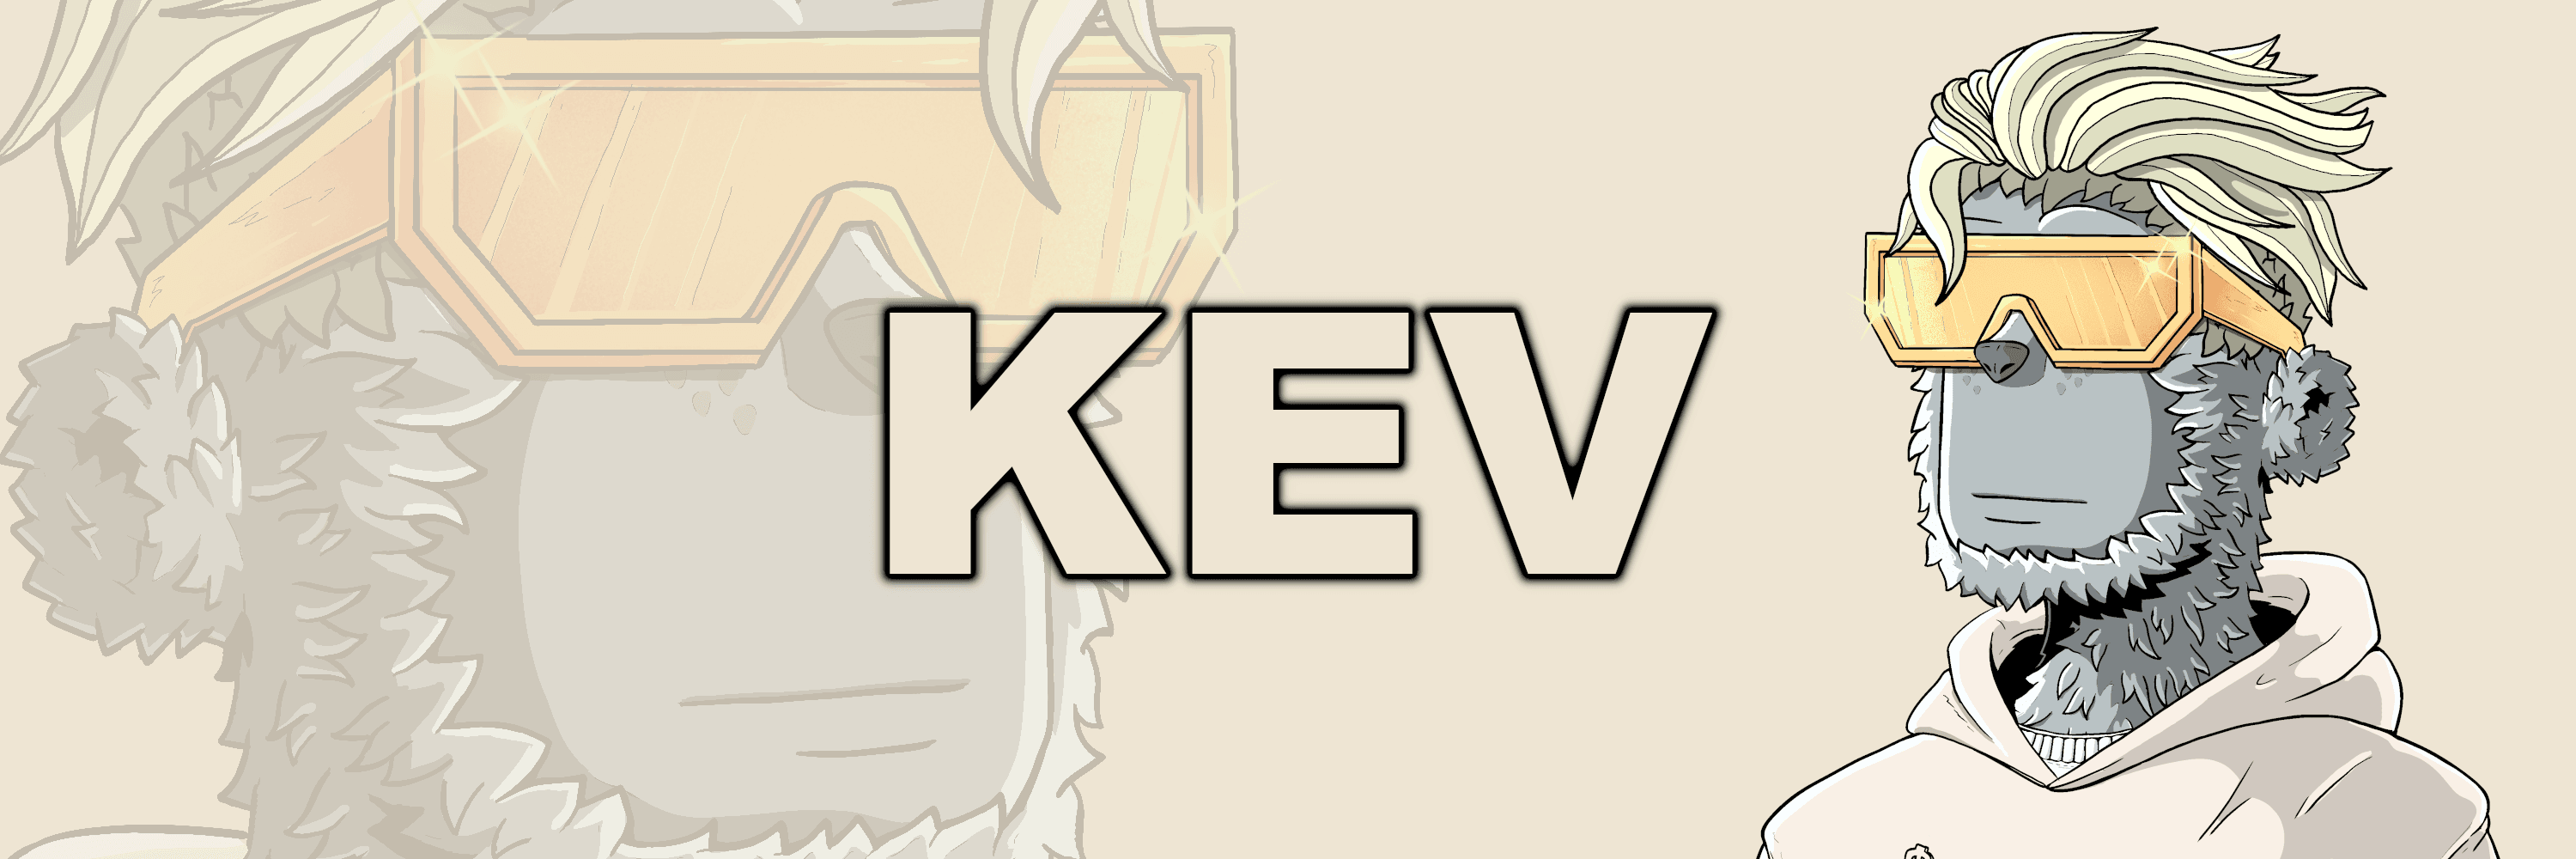 Kevinwin95 banner